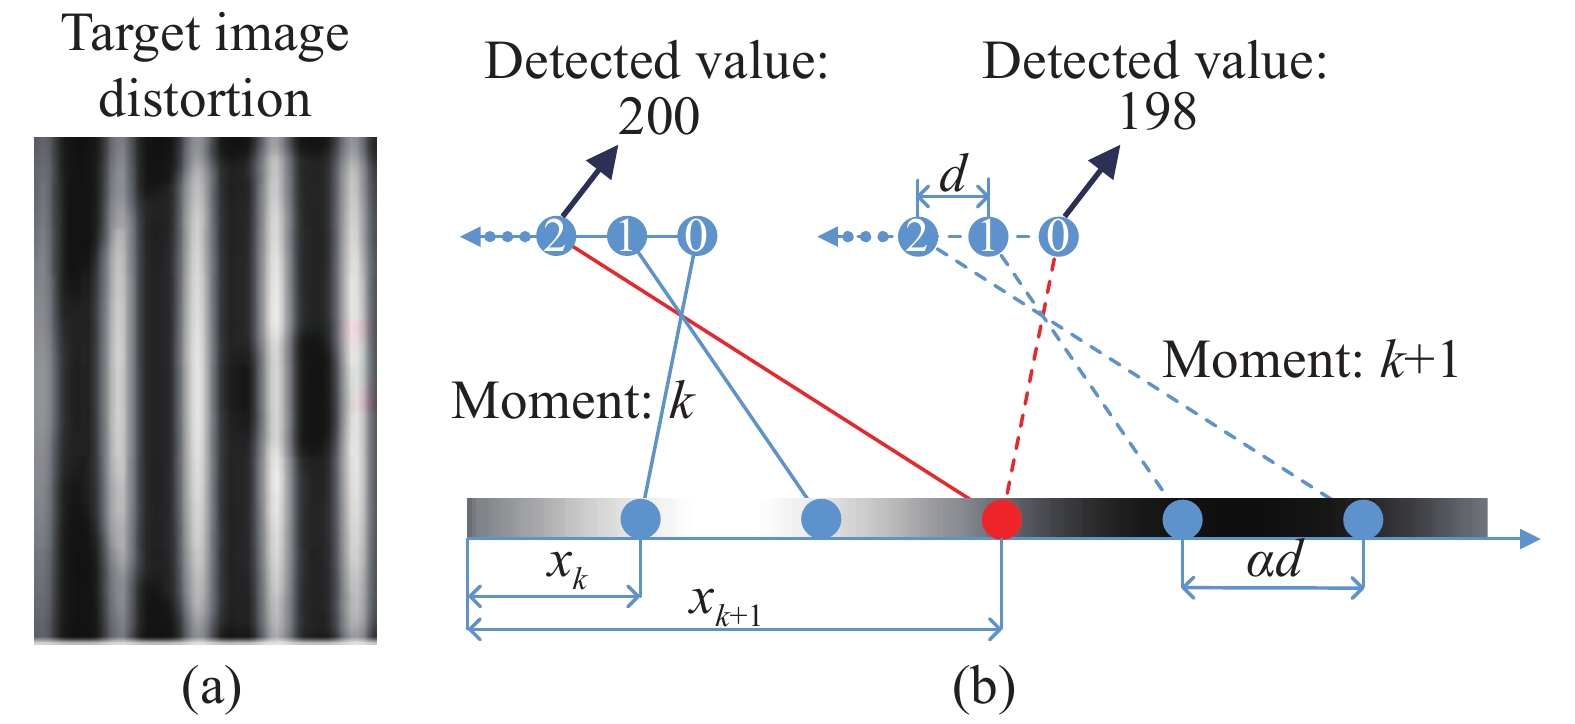 Two main factors affecting the measurement model. (a) Target image distortion; (b) Inconsistencies between image sensors unit